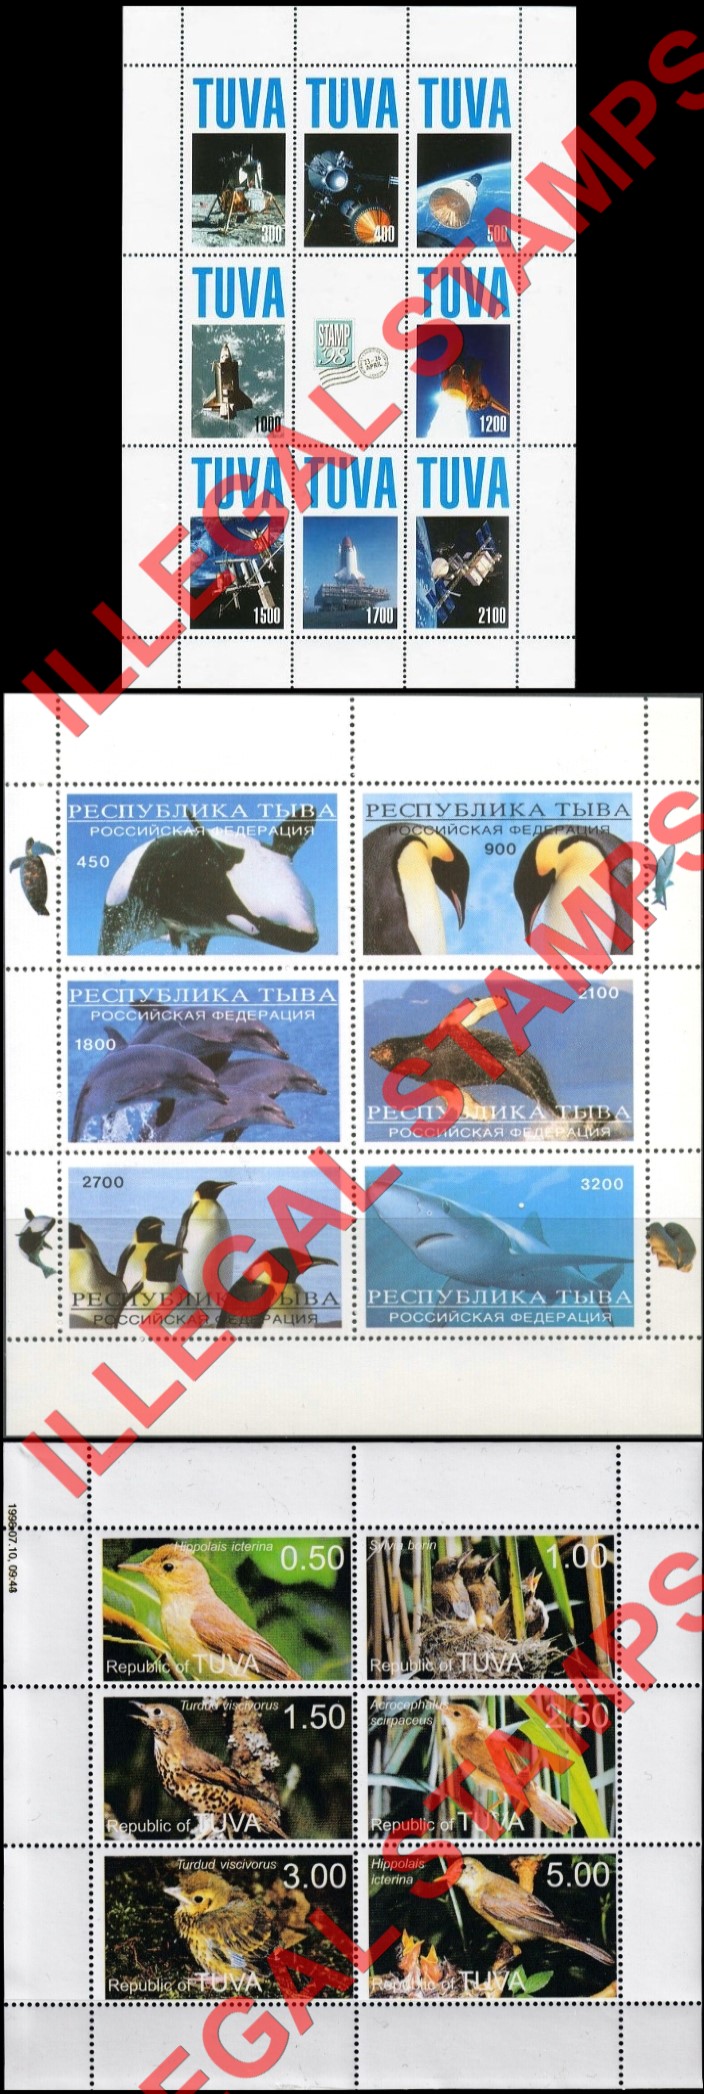 Republic of Tuva 1998 Counterfeit Illegal Stamps (Part 3)